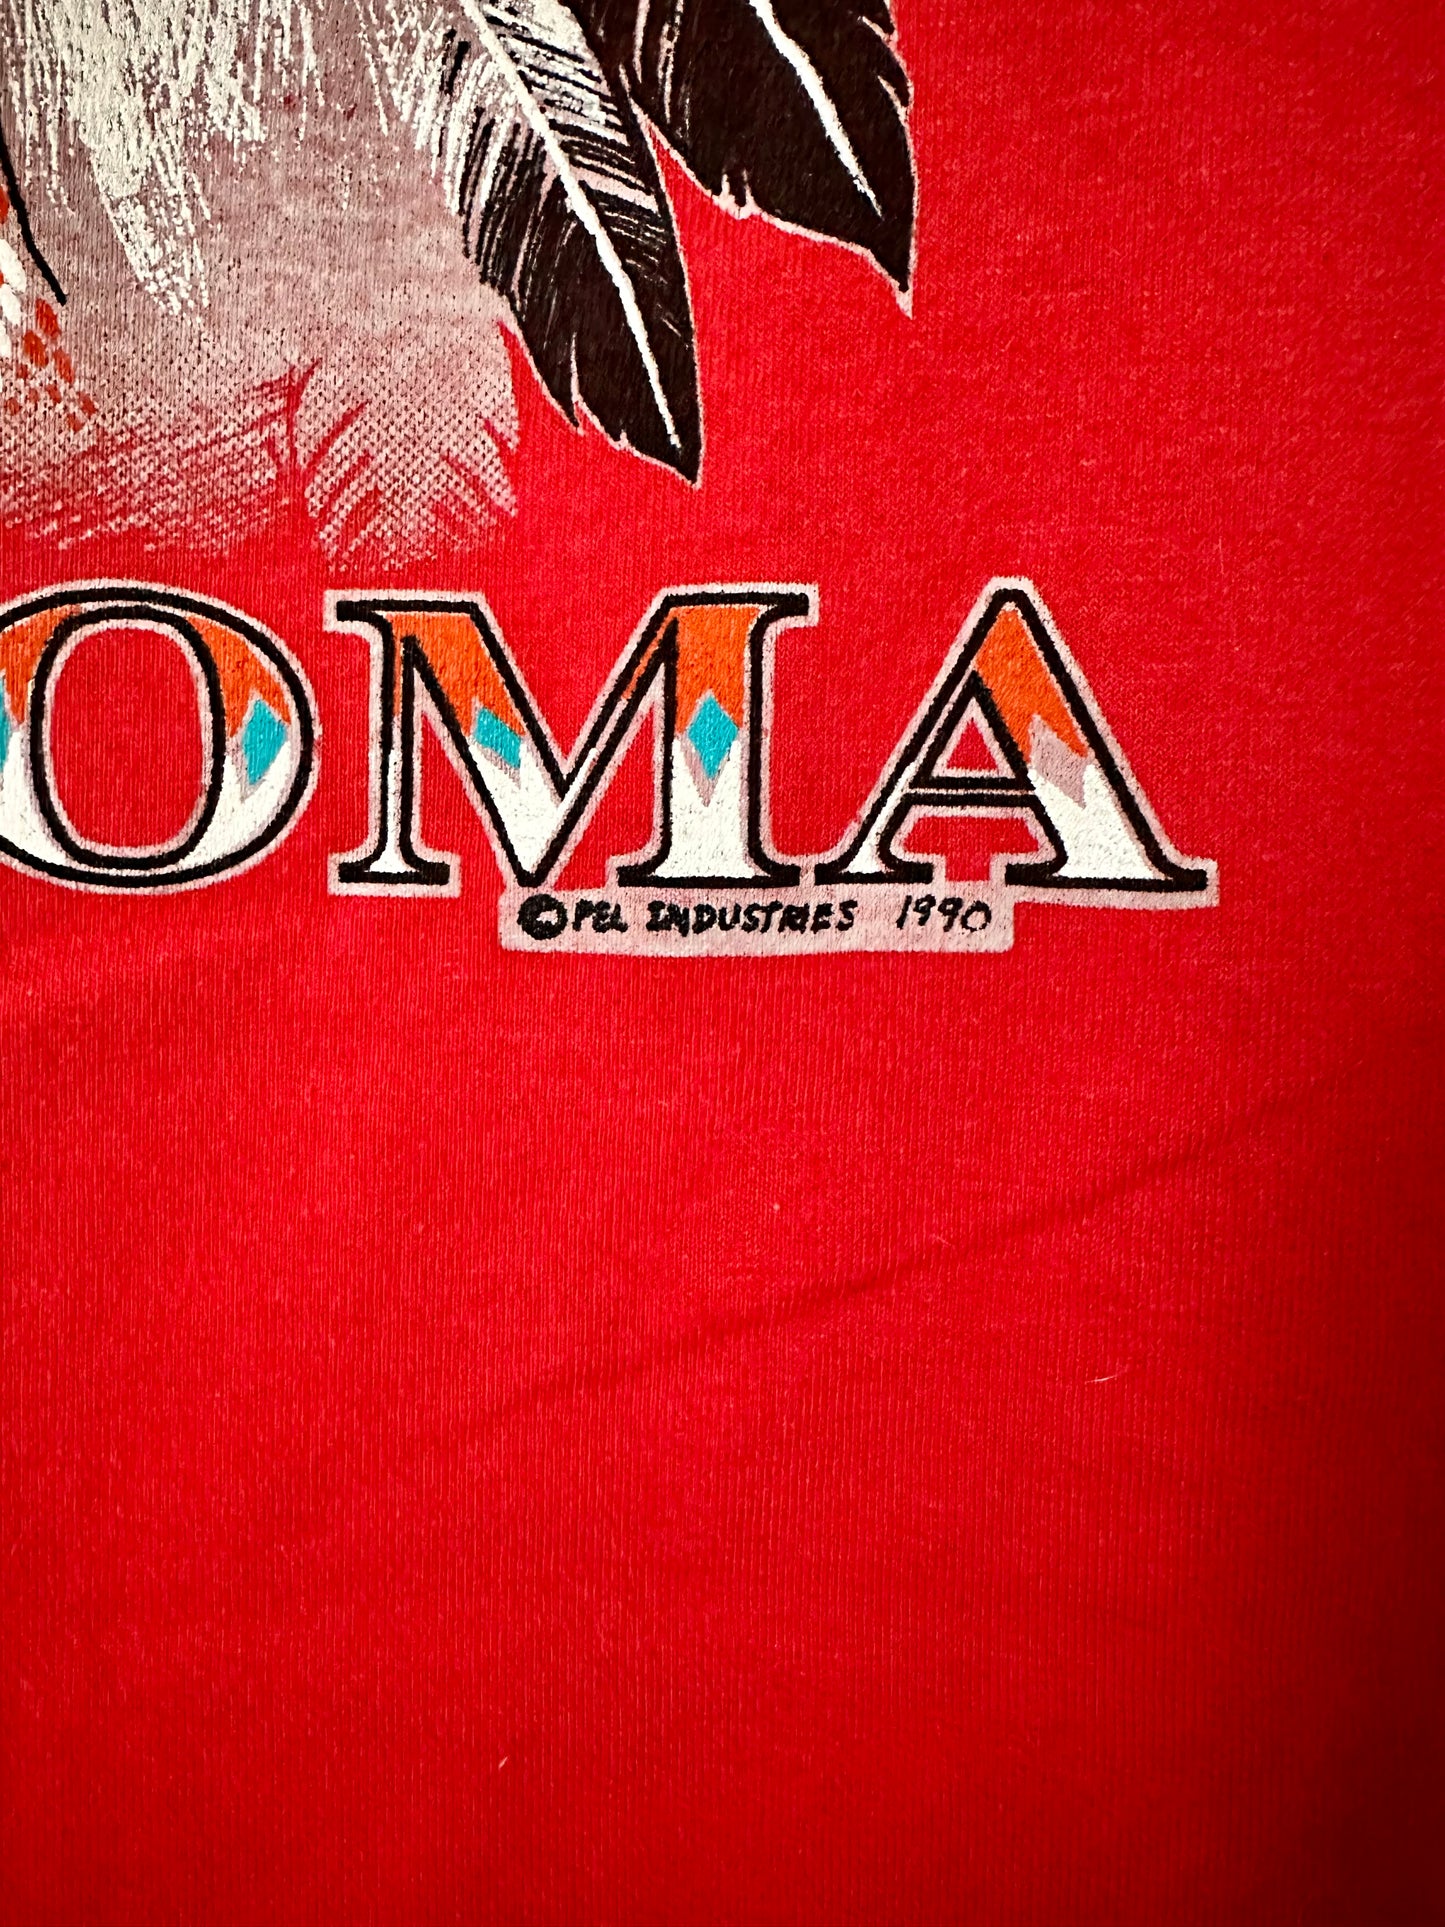 Vintage Oklahoma-T-shirt